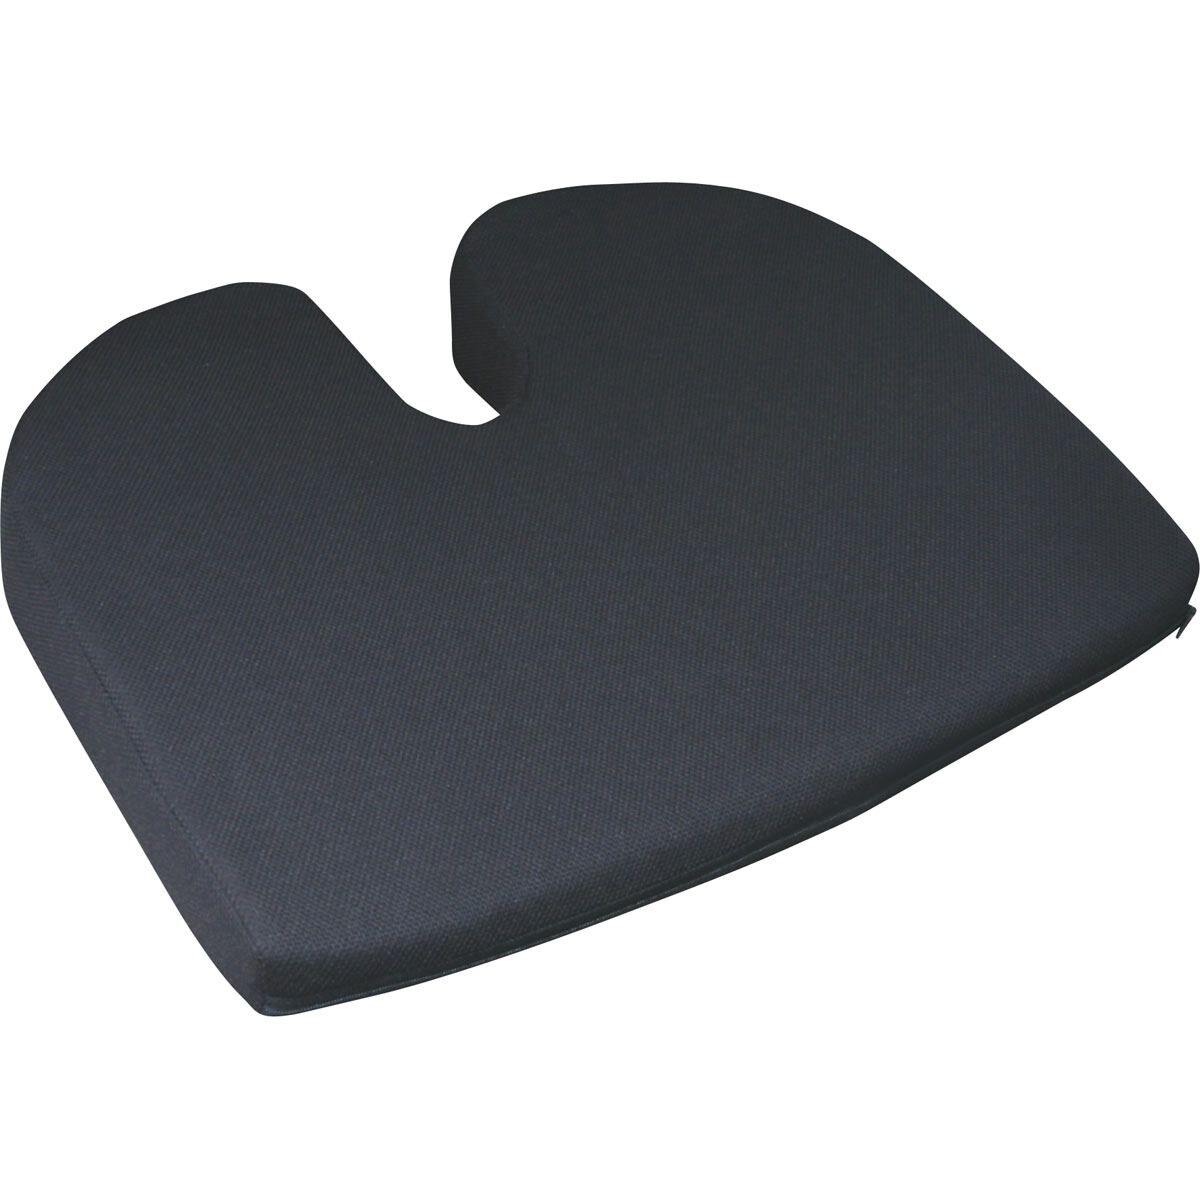 Car and Truck Seat Cushion - Memory Foam Wedge Chair Driving Pillow (Black)